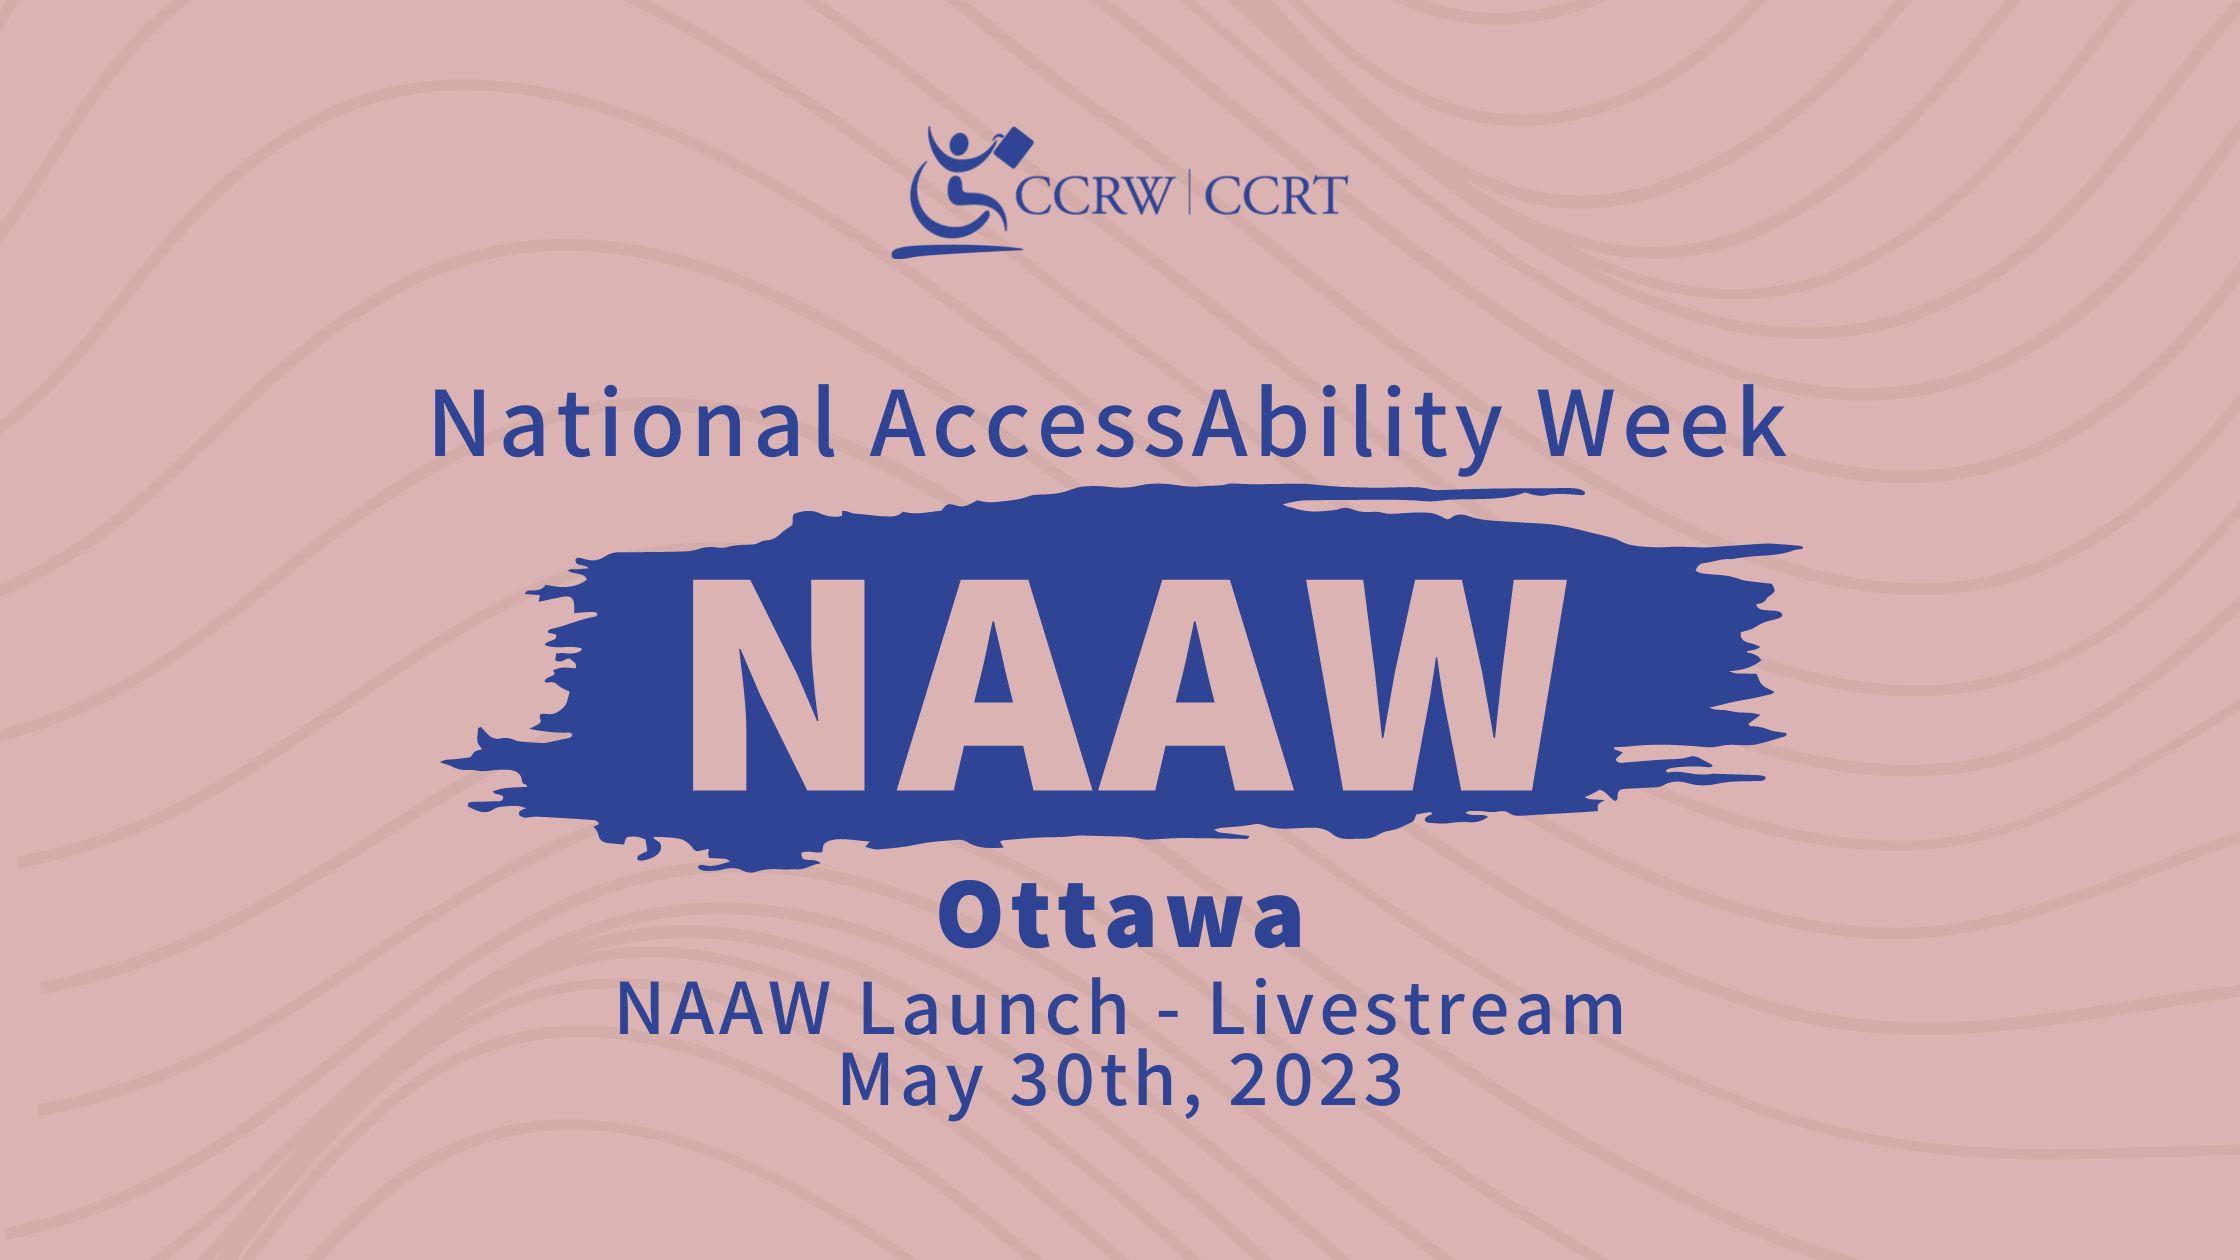 NAAW 2023 – Ottawa: NAAW Launch Livestream